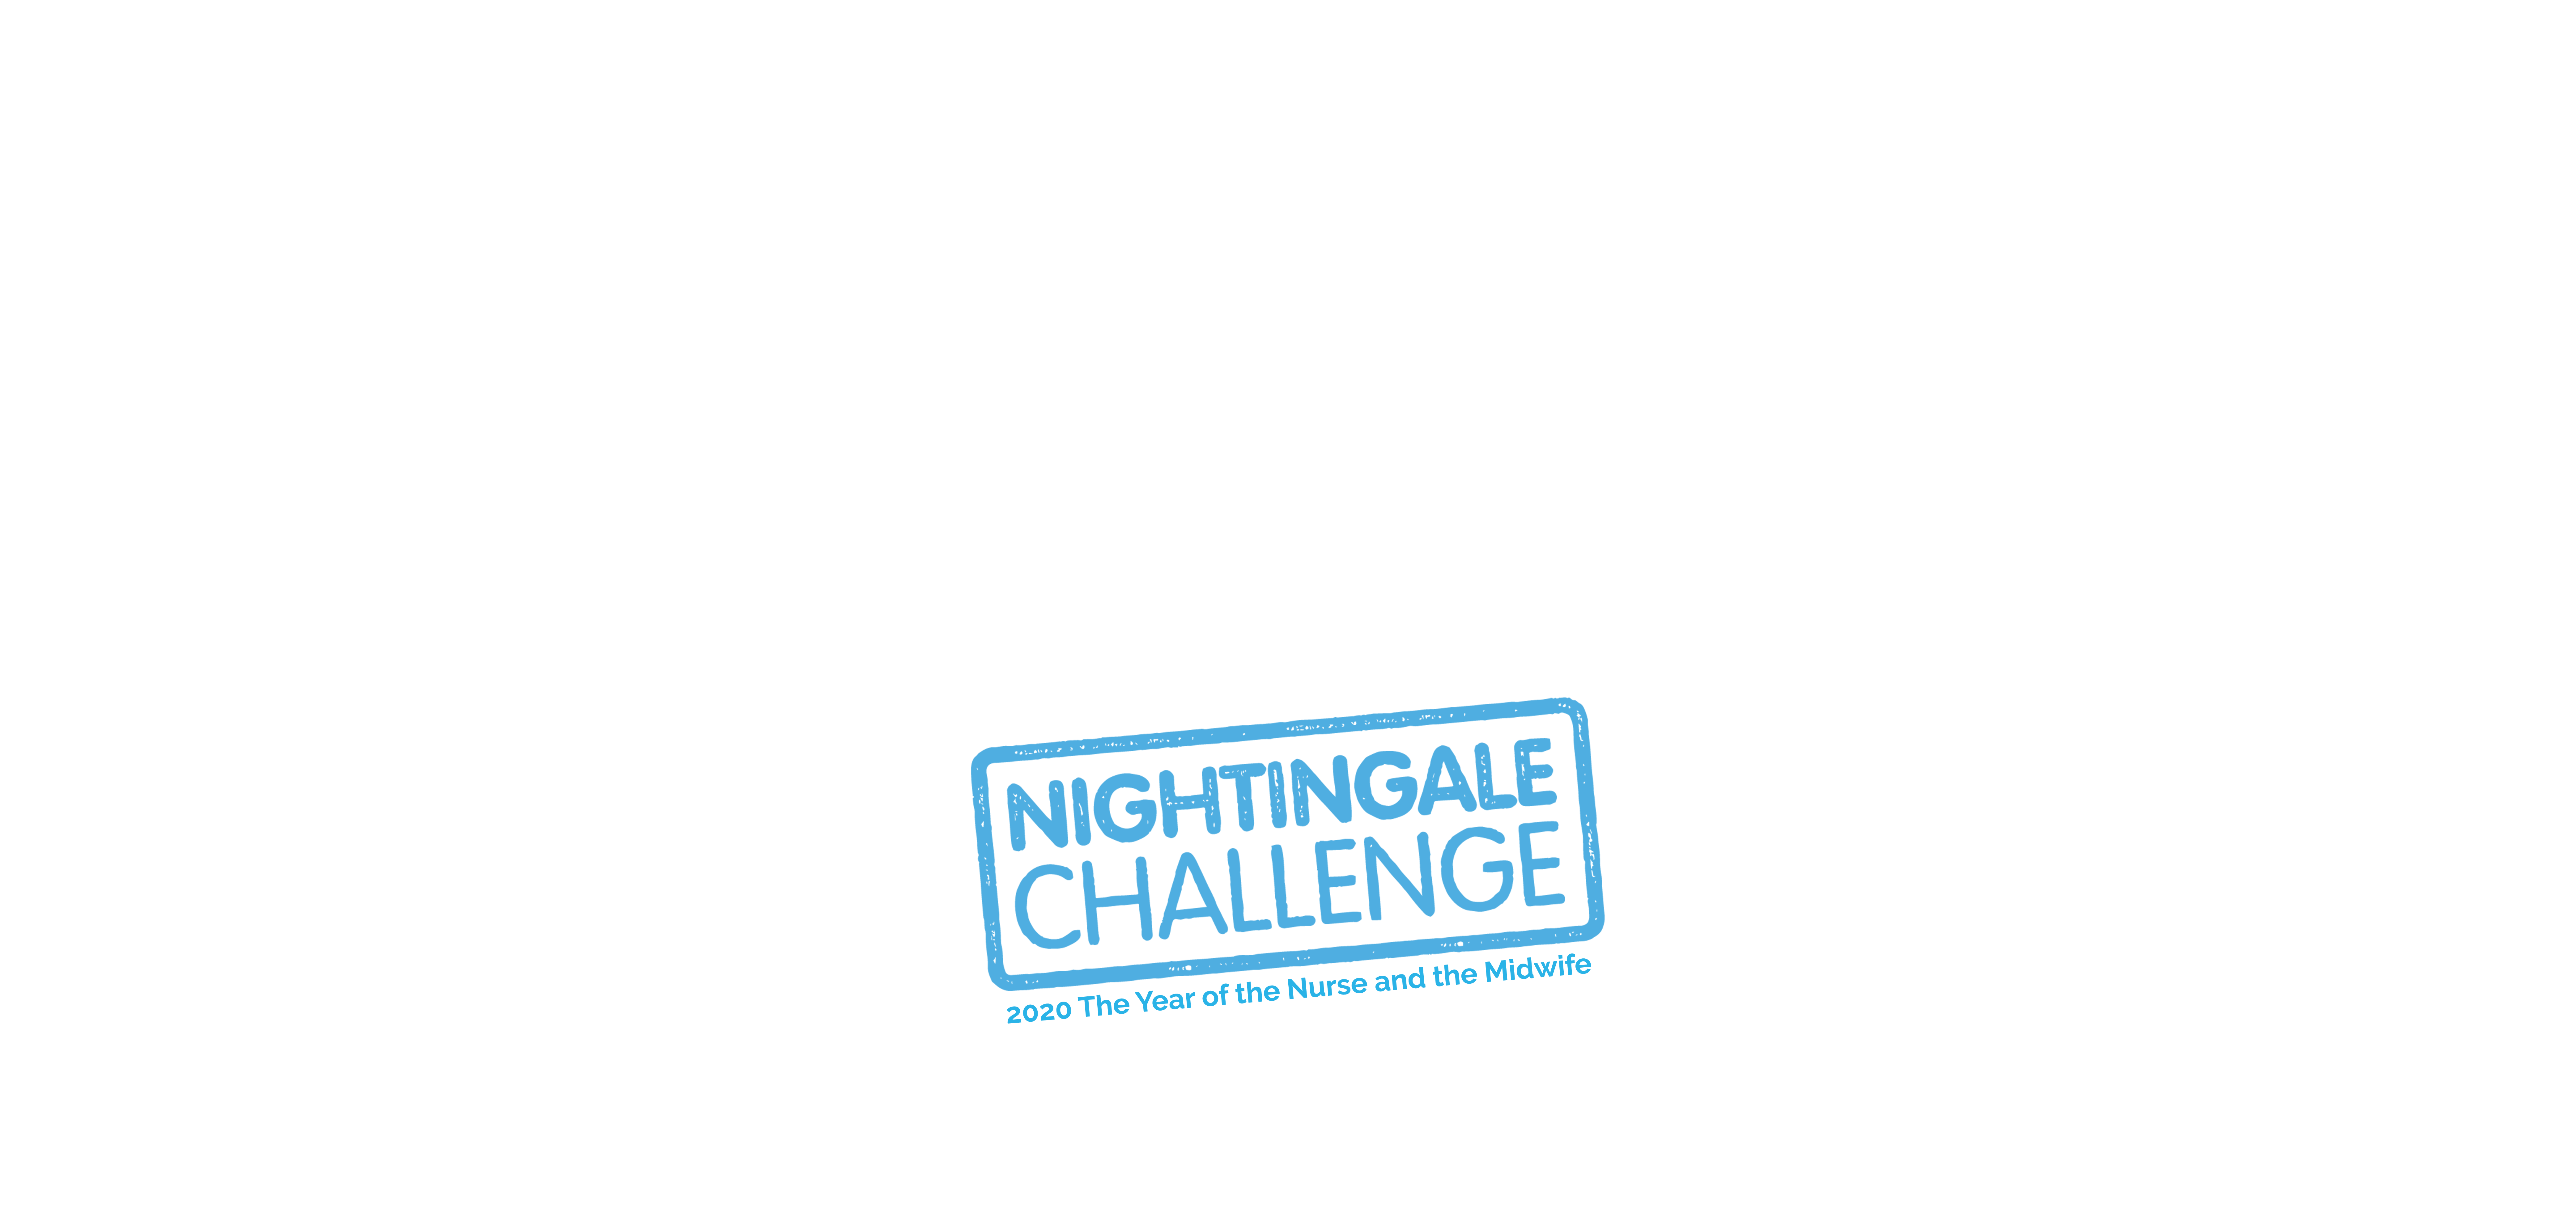 nightingale-challenge-banner-title-06